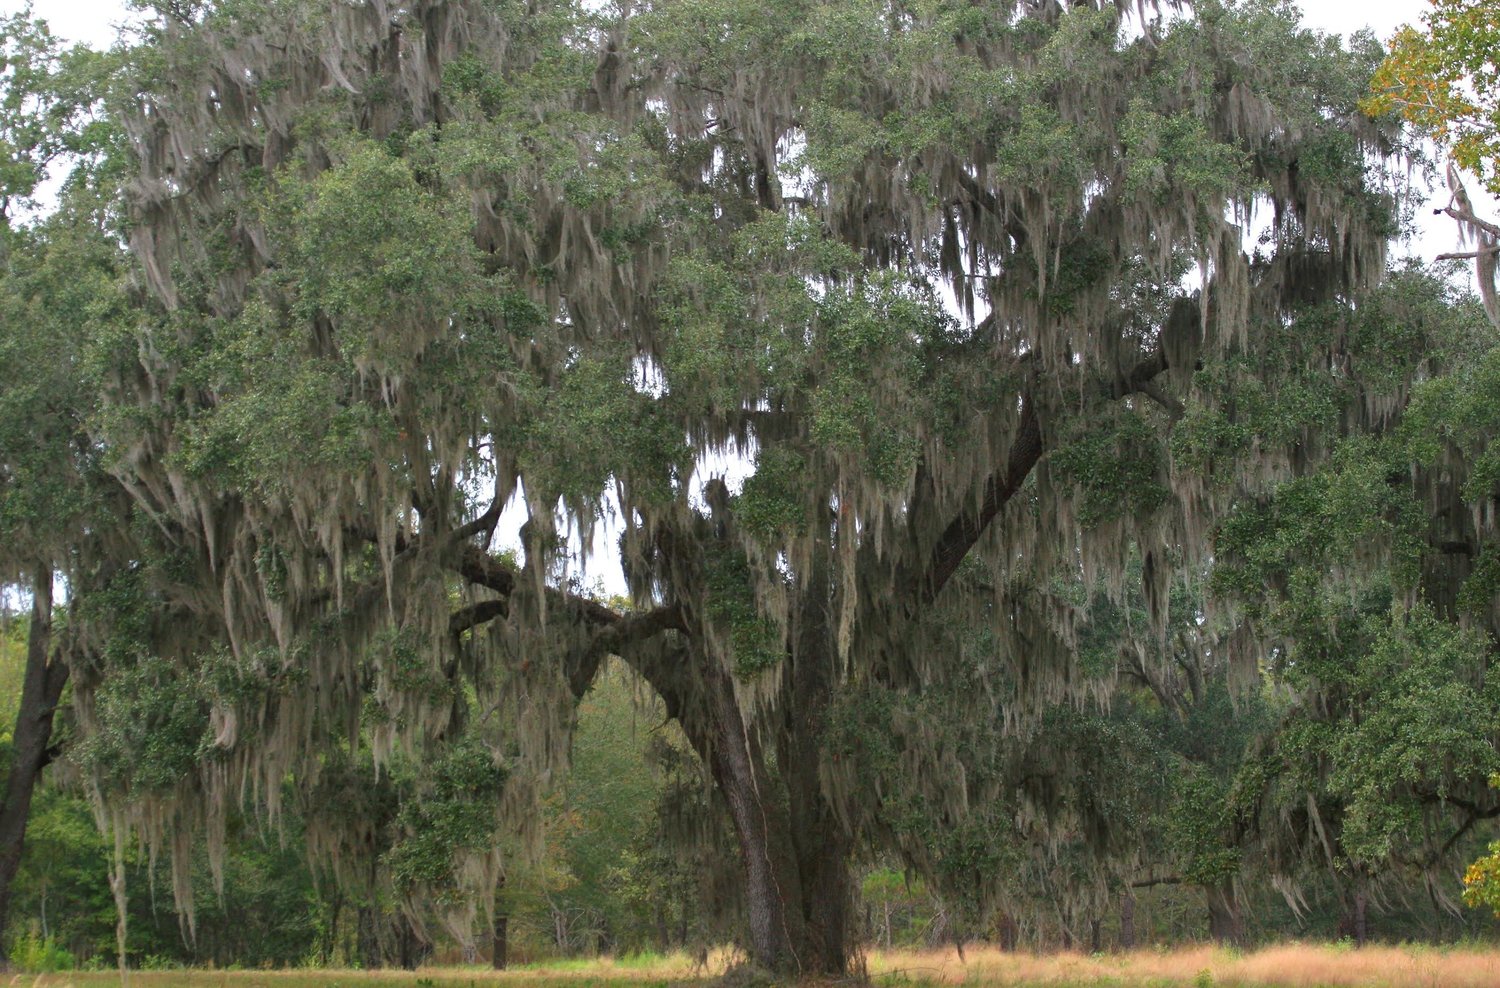 Live oak tree in a North Florida yard.